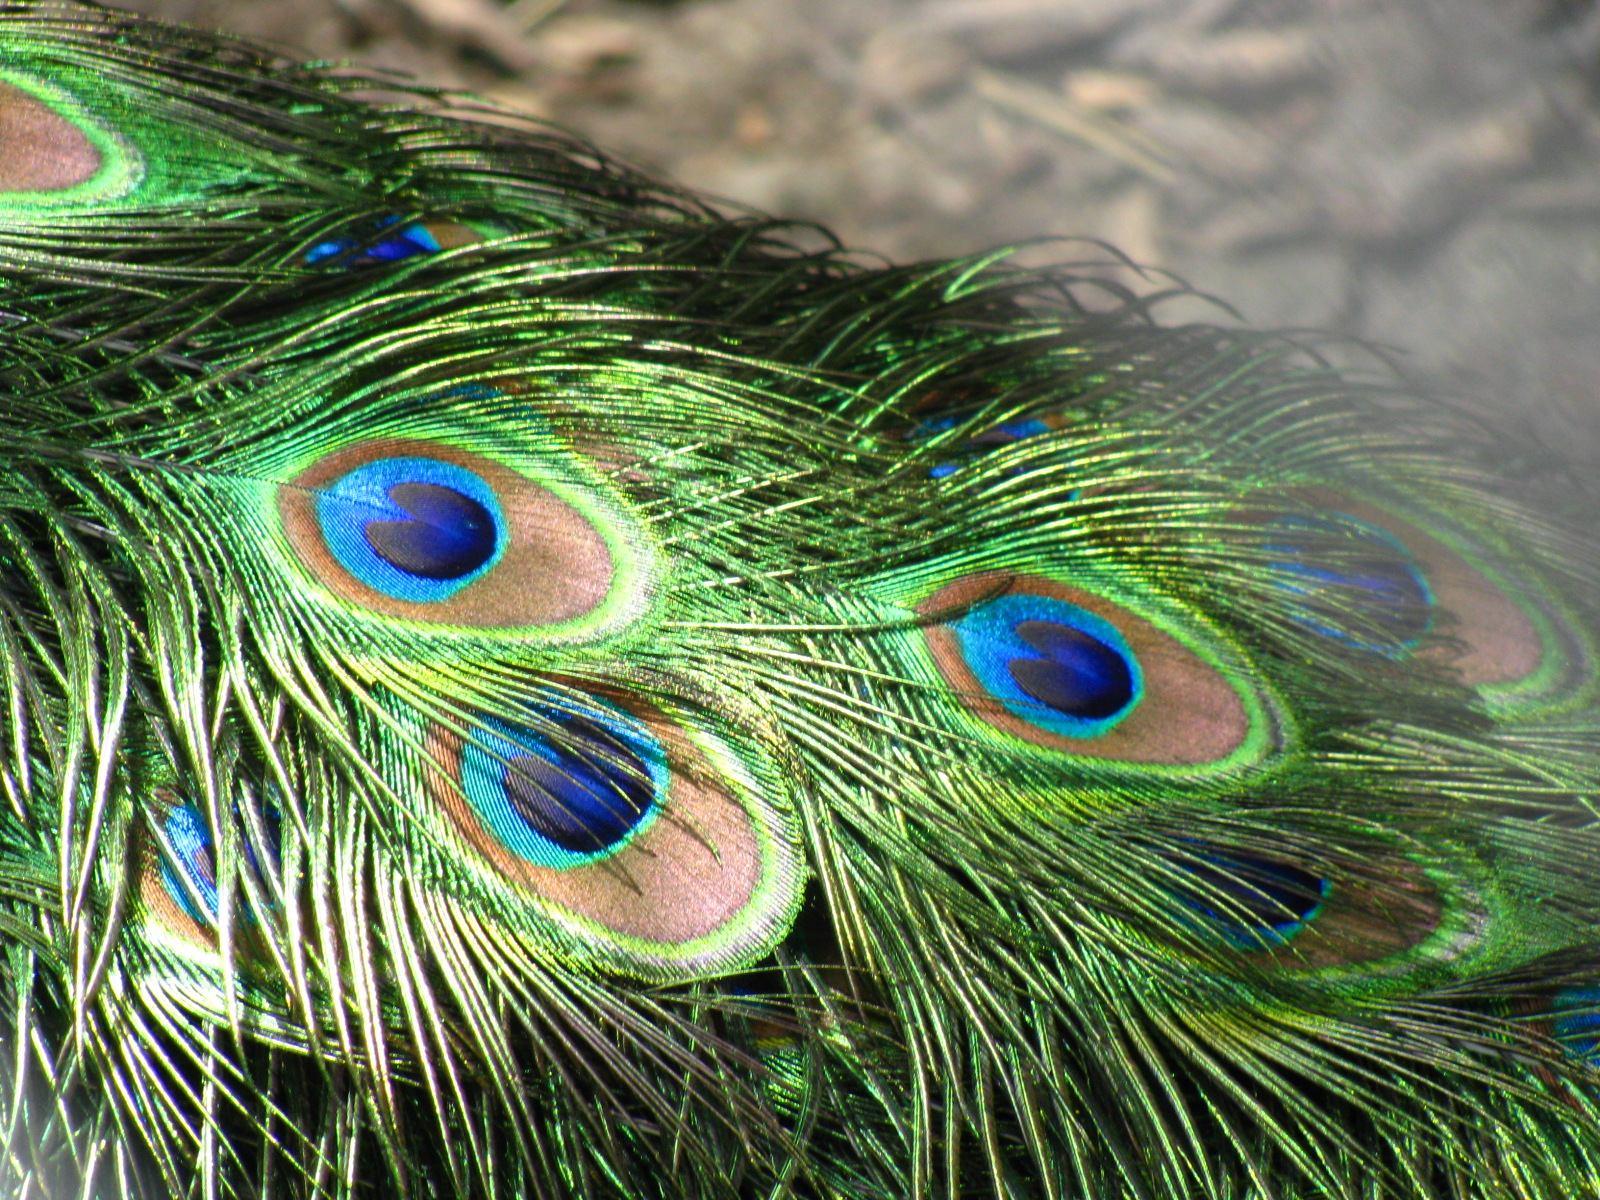 File:Peacock feathers closeup.jpg - Wikipedia